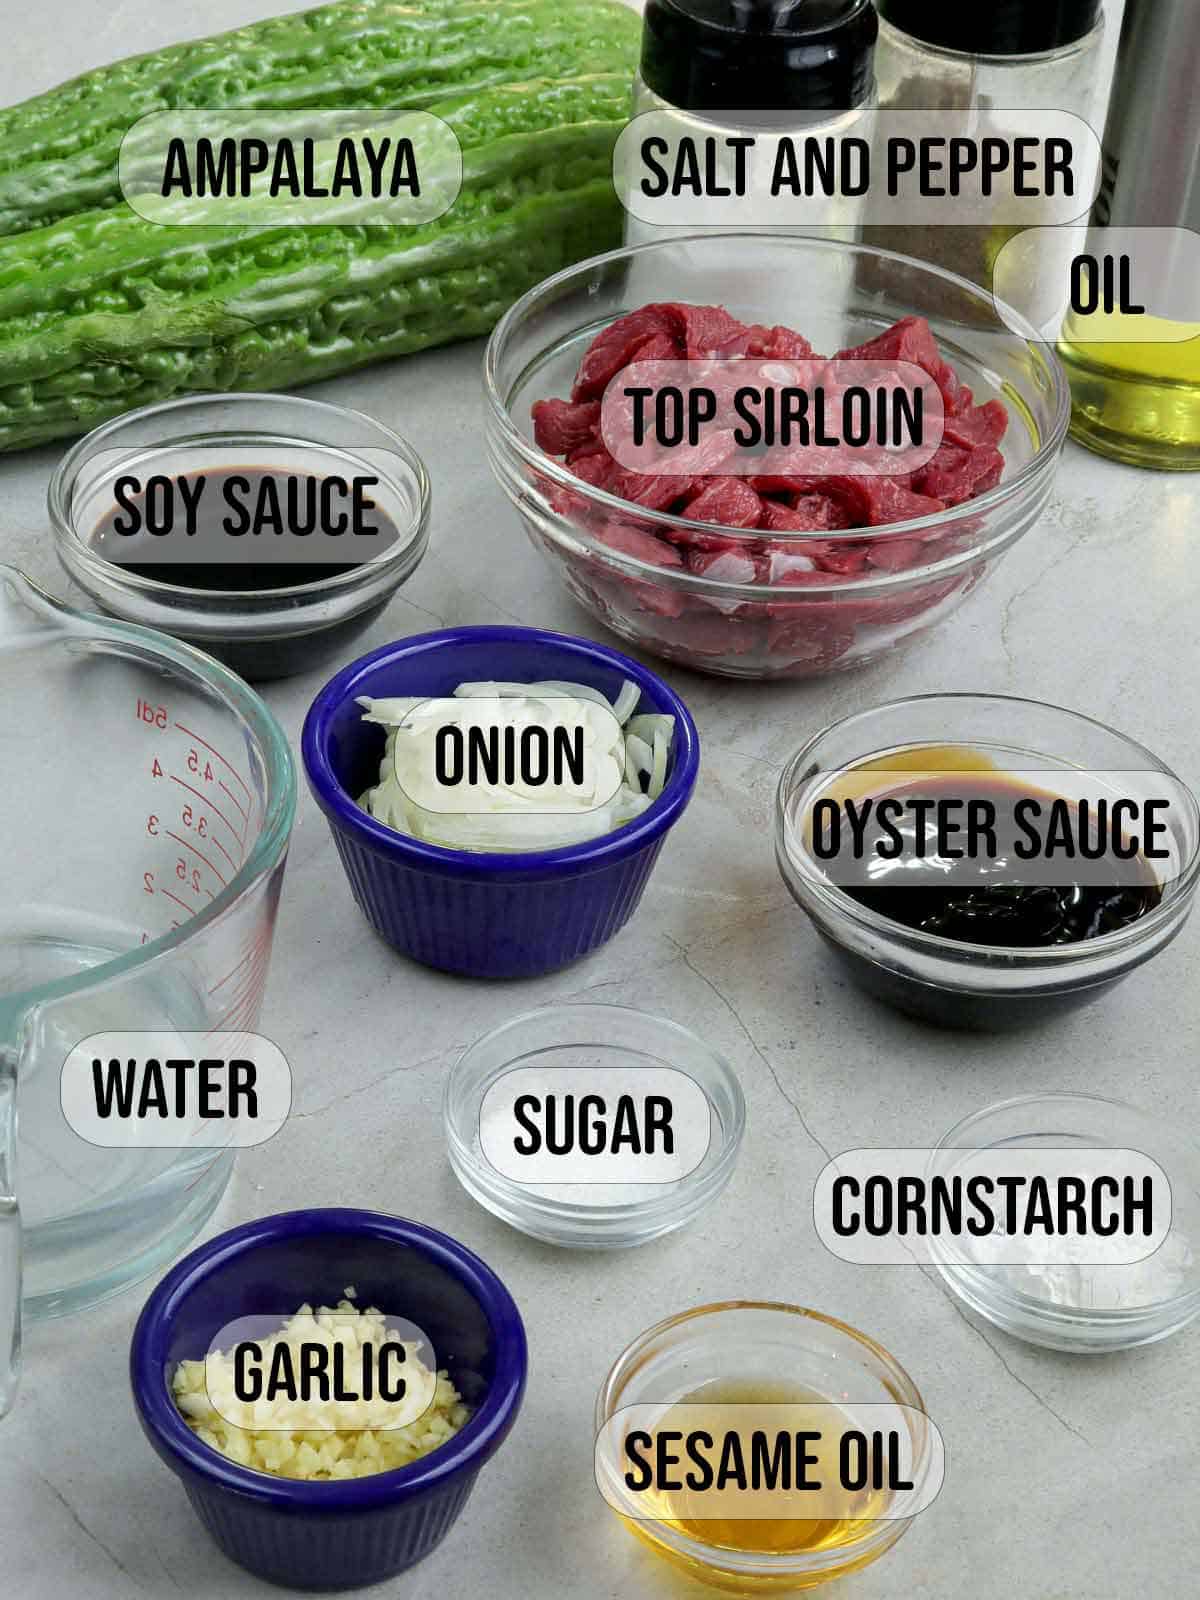 bittermelon, sirloin, onion, garlic, oyster sauce, cornstarch, sesame oil, water, soy sauce, sugar, salt, pepper, oil in bowls.